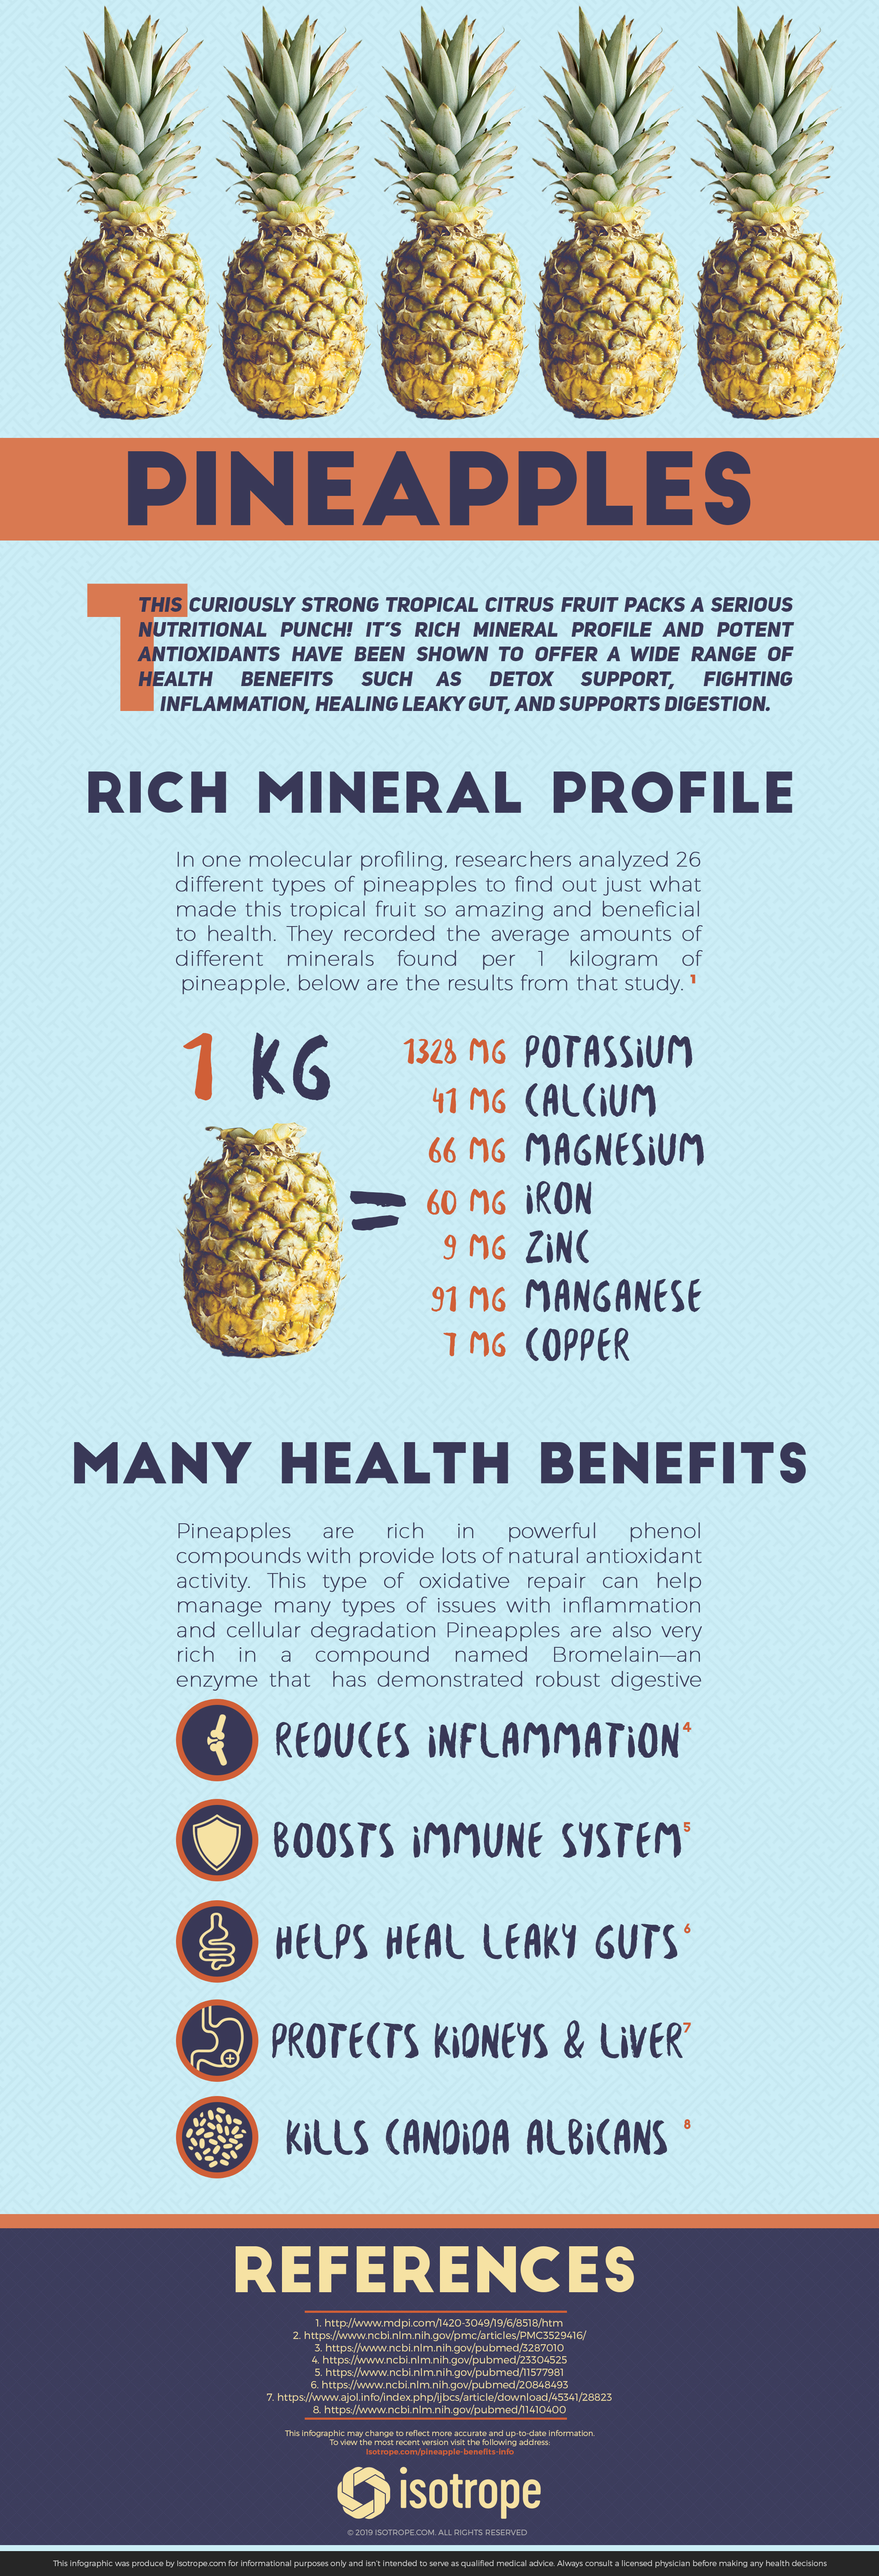 Pineapple Superfood Benefits